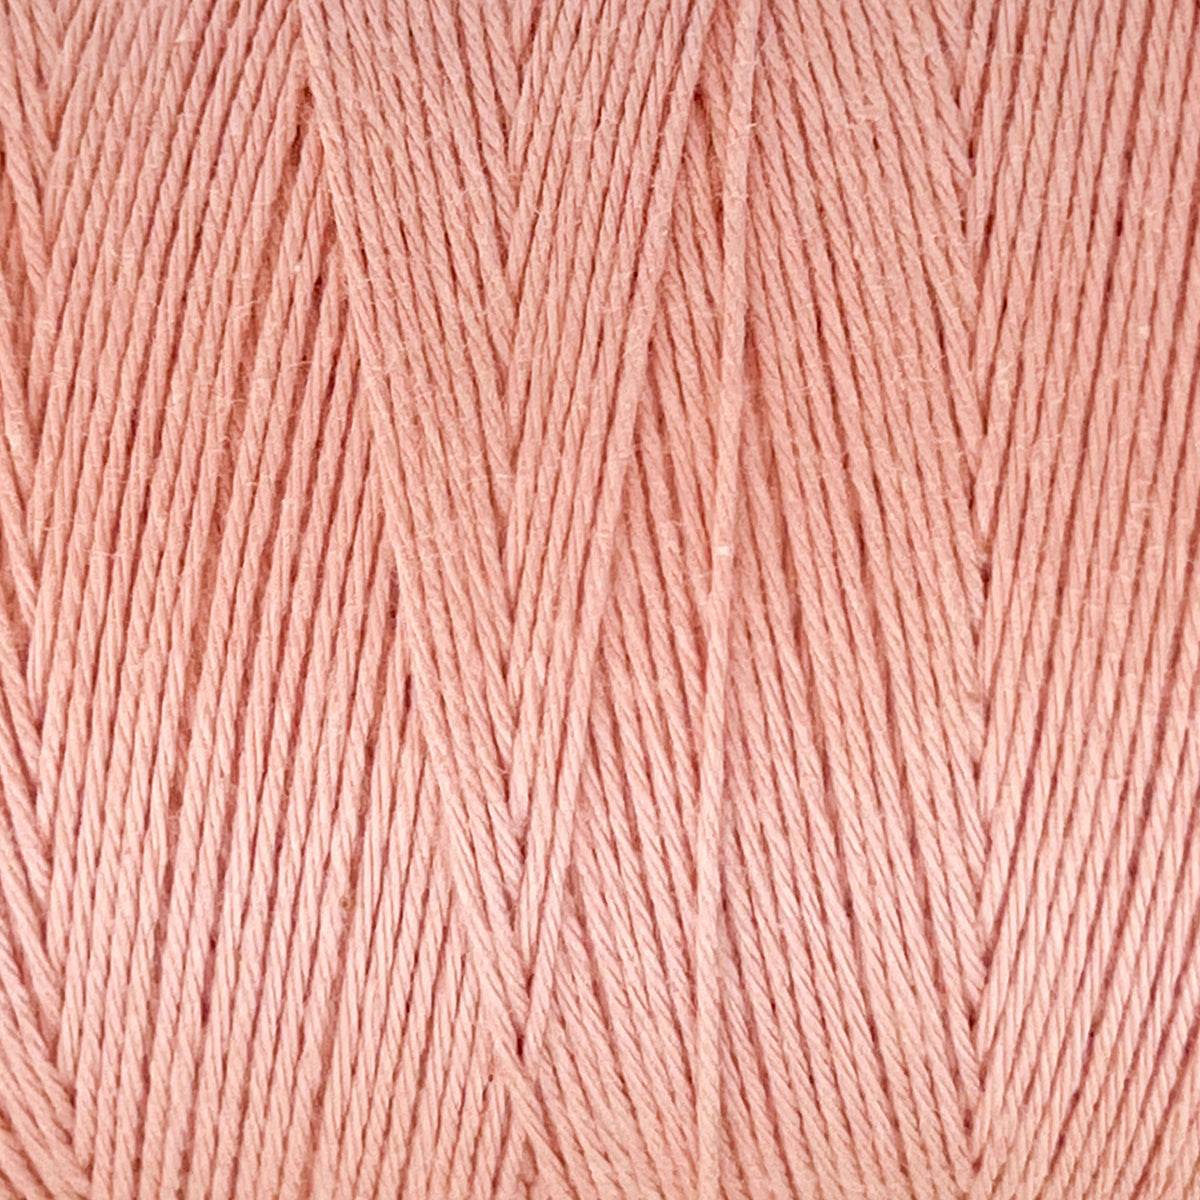 8/4 Cotton Warp Yarn - Small Cone - Natural and Colors